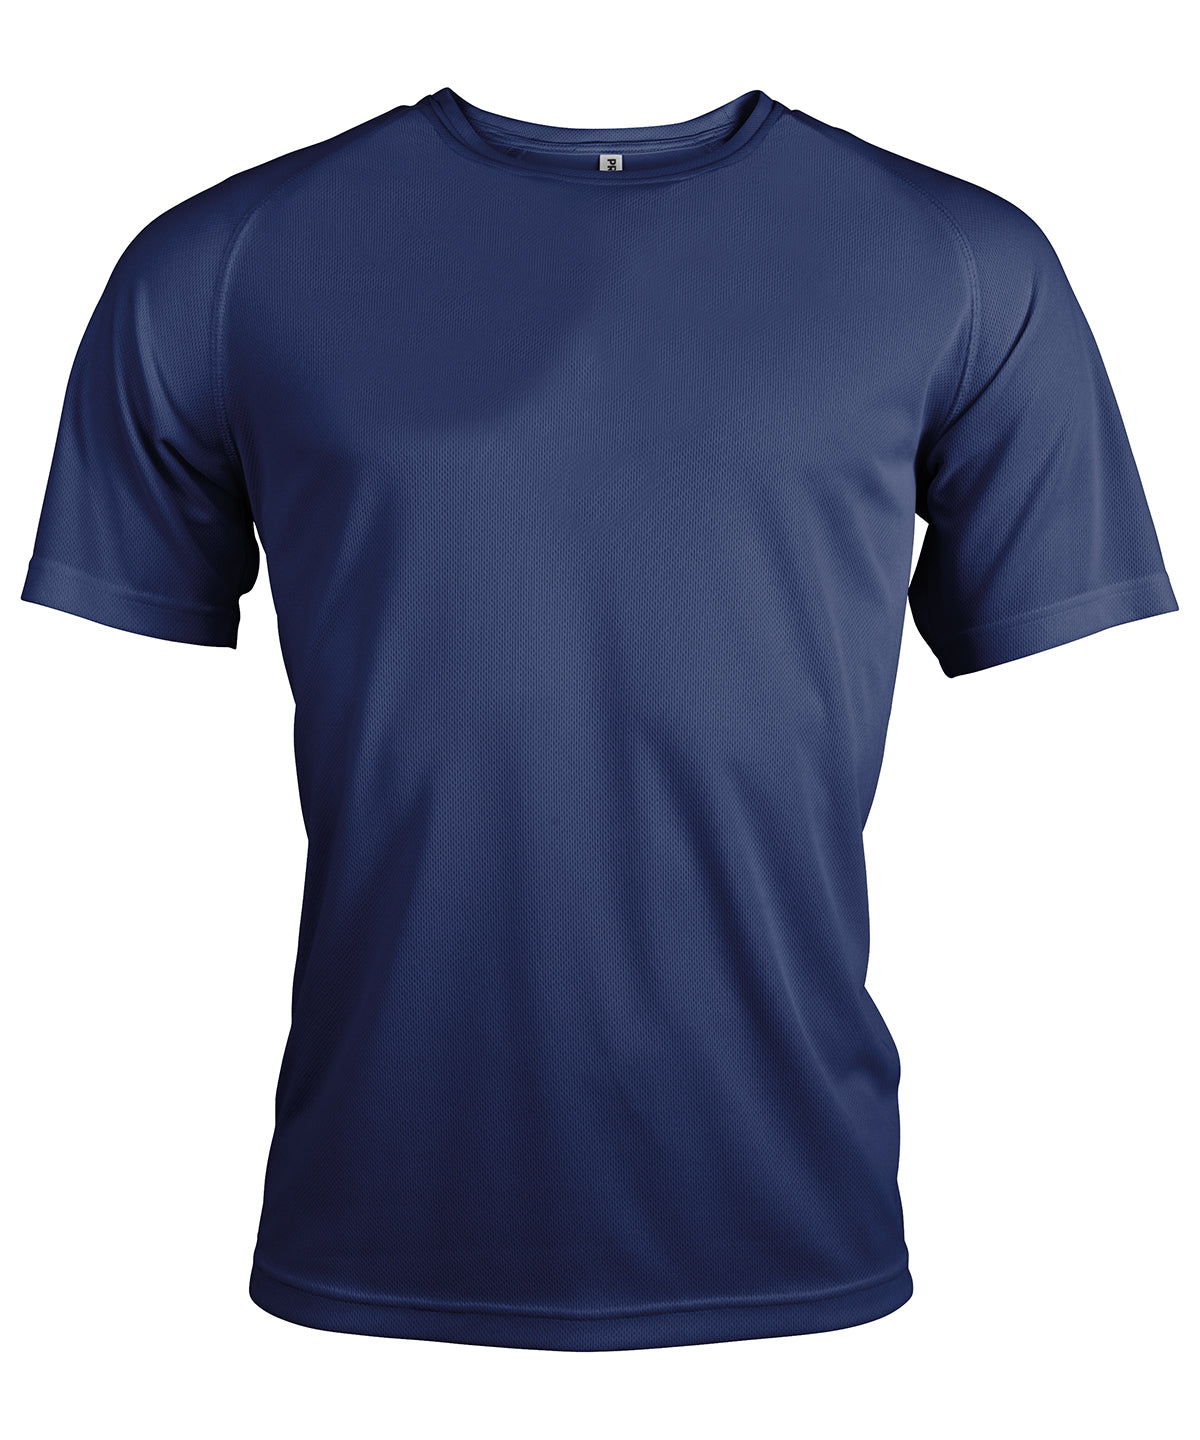 Personalised T-Shirts - Black Kariban Proact Men's short-sleeved sports T-shirt